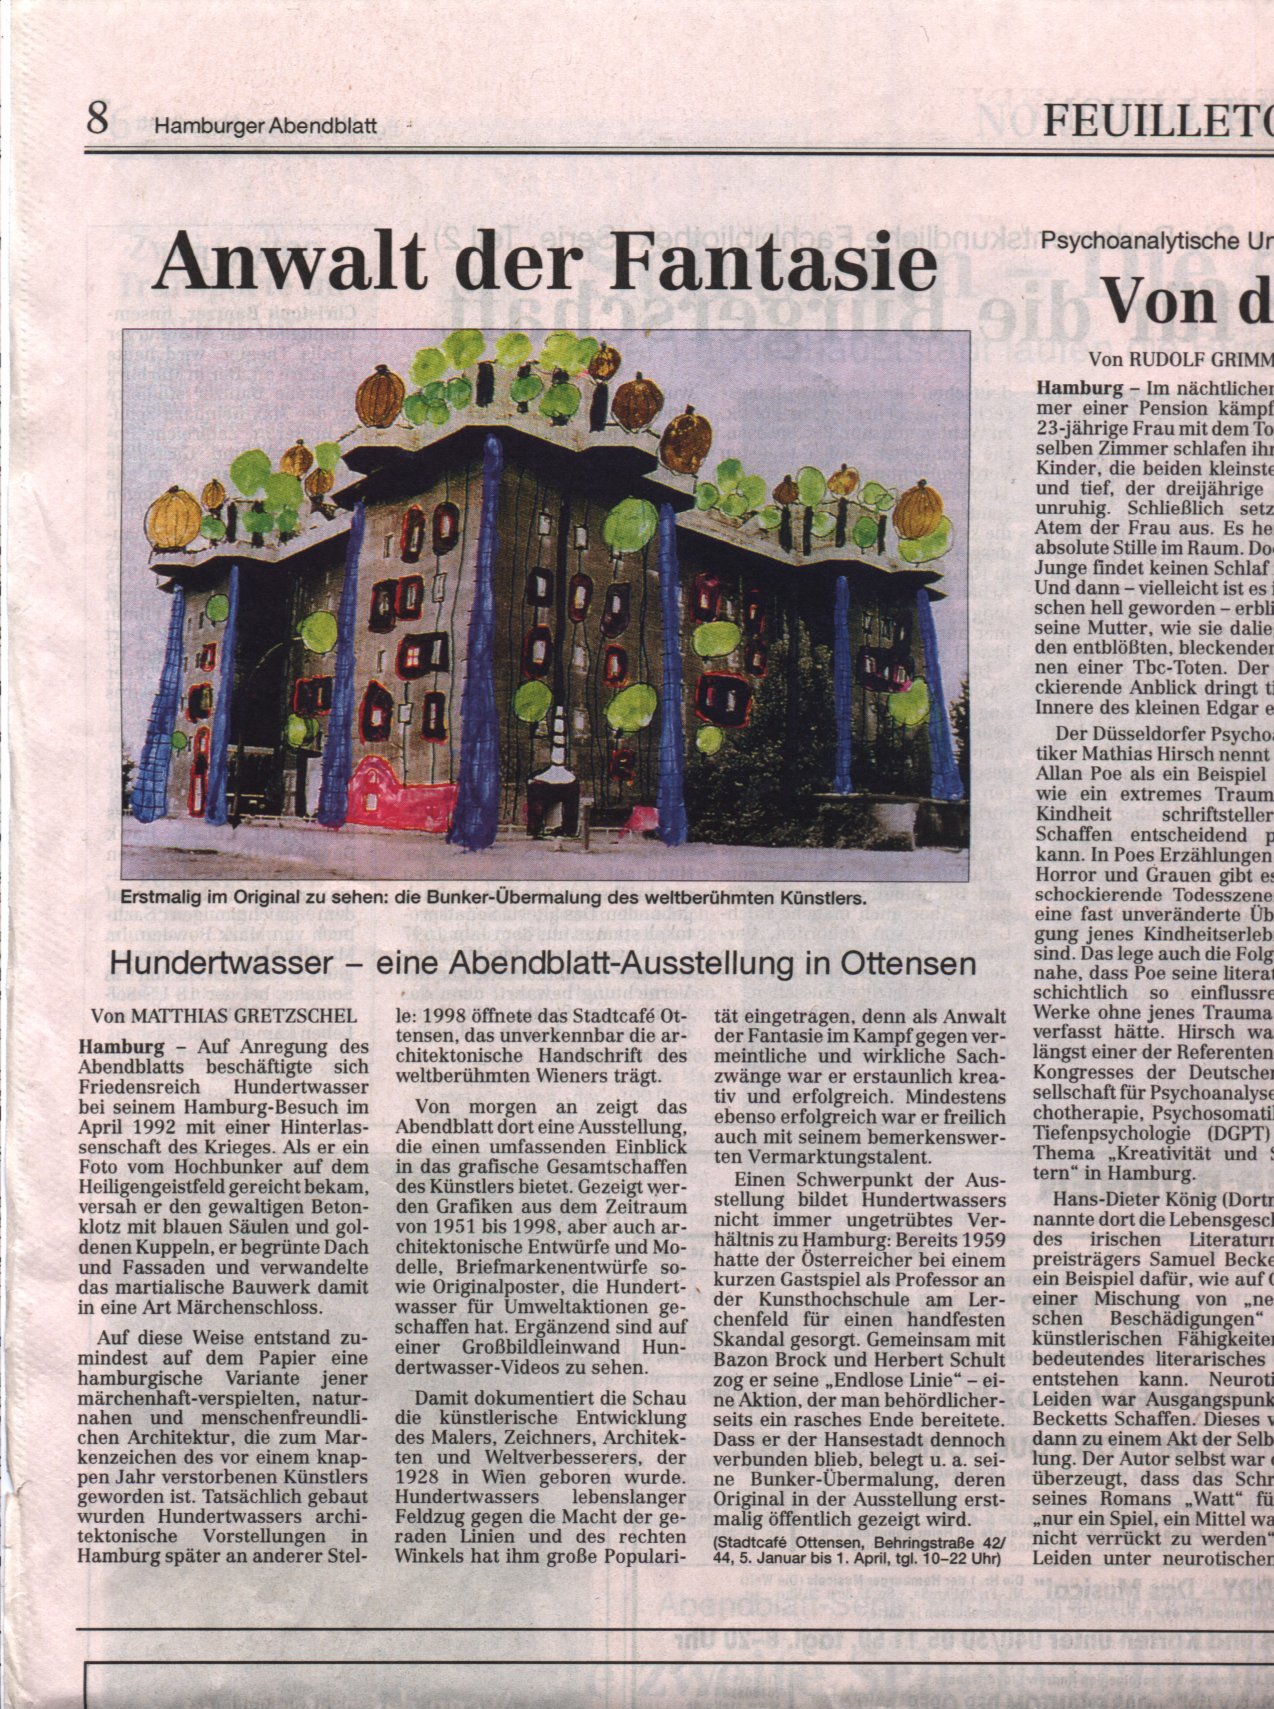 Hamburger Abendblatt Nr. 3/1 vom 4.1.2001, Seite 8